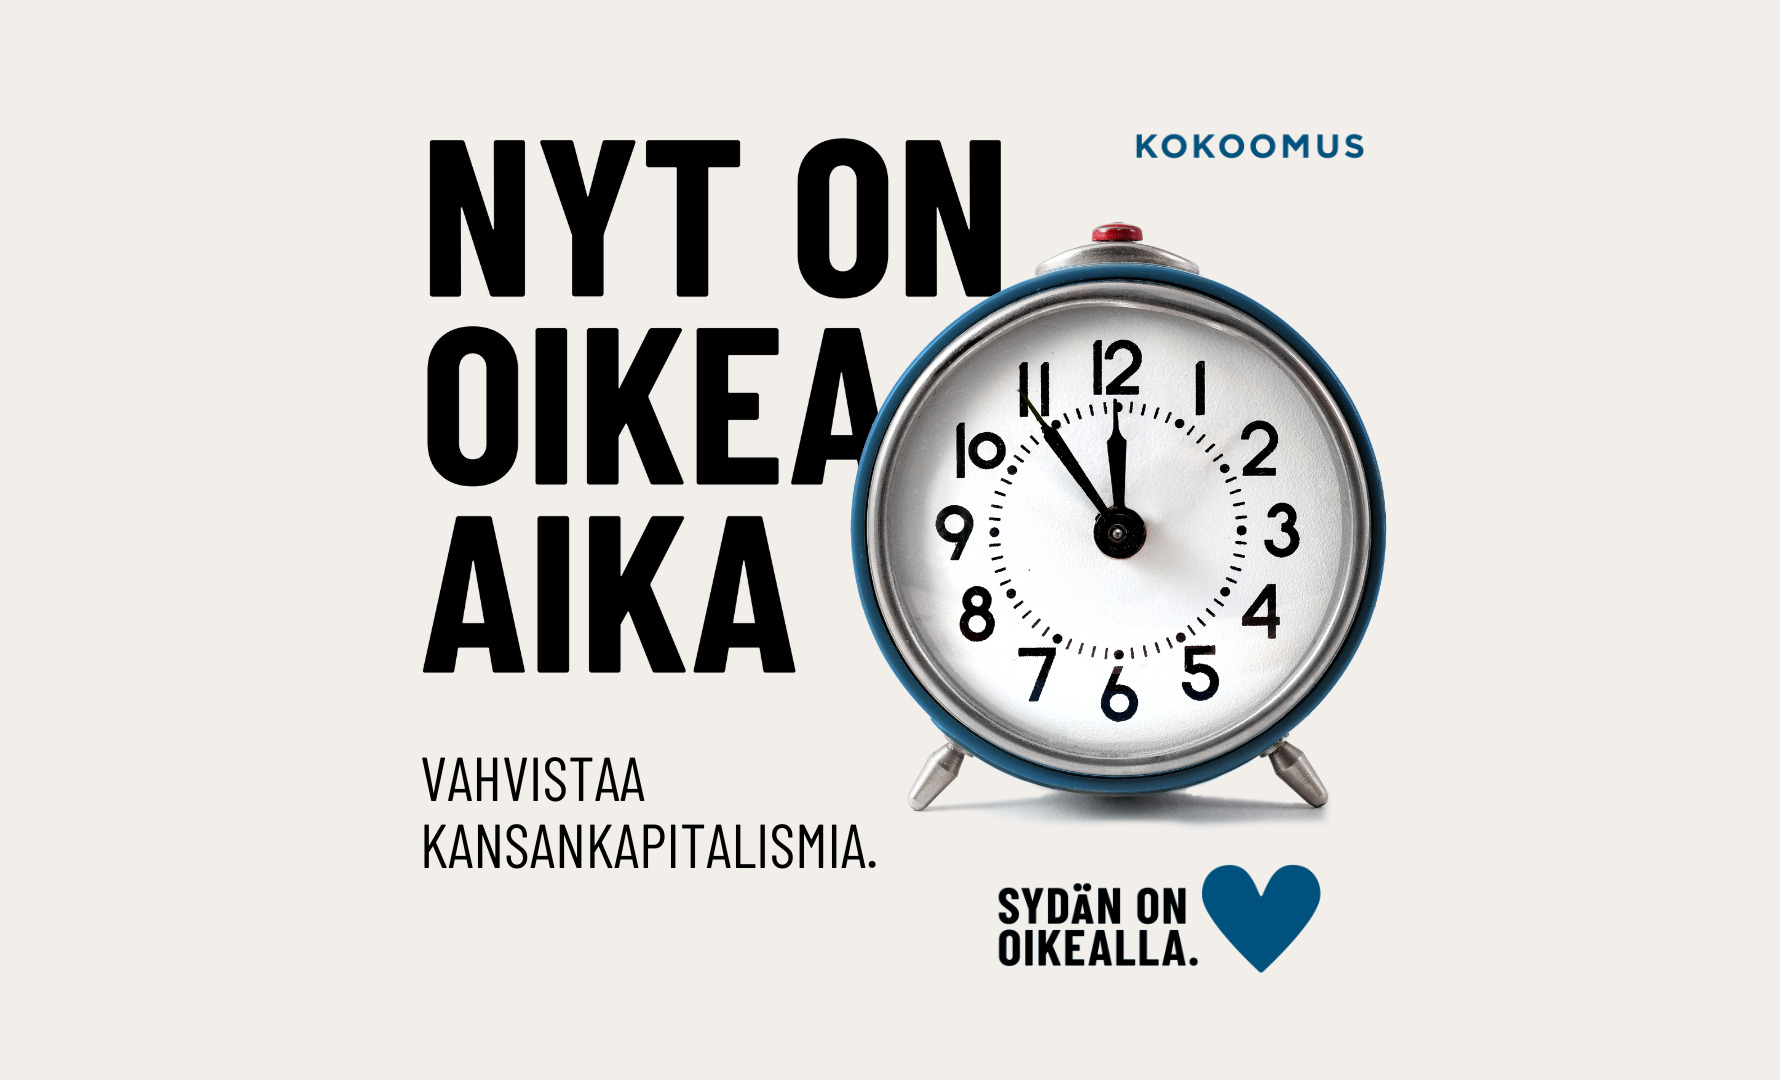 www.kokoomus.fi